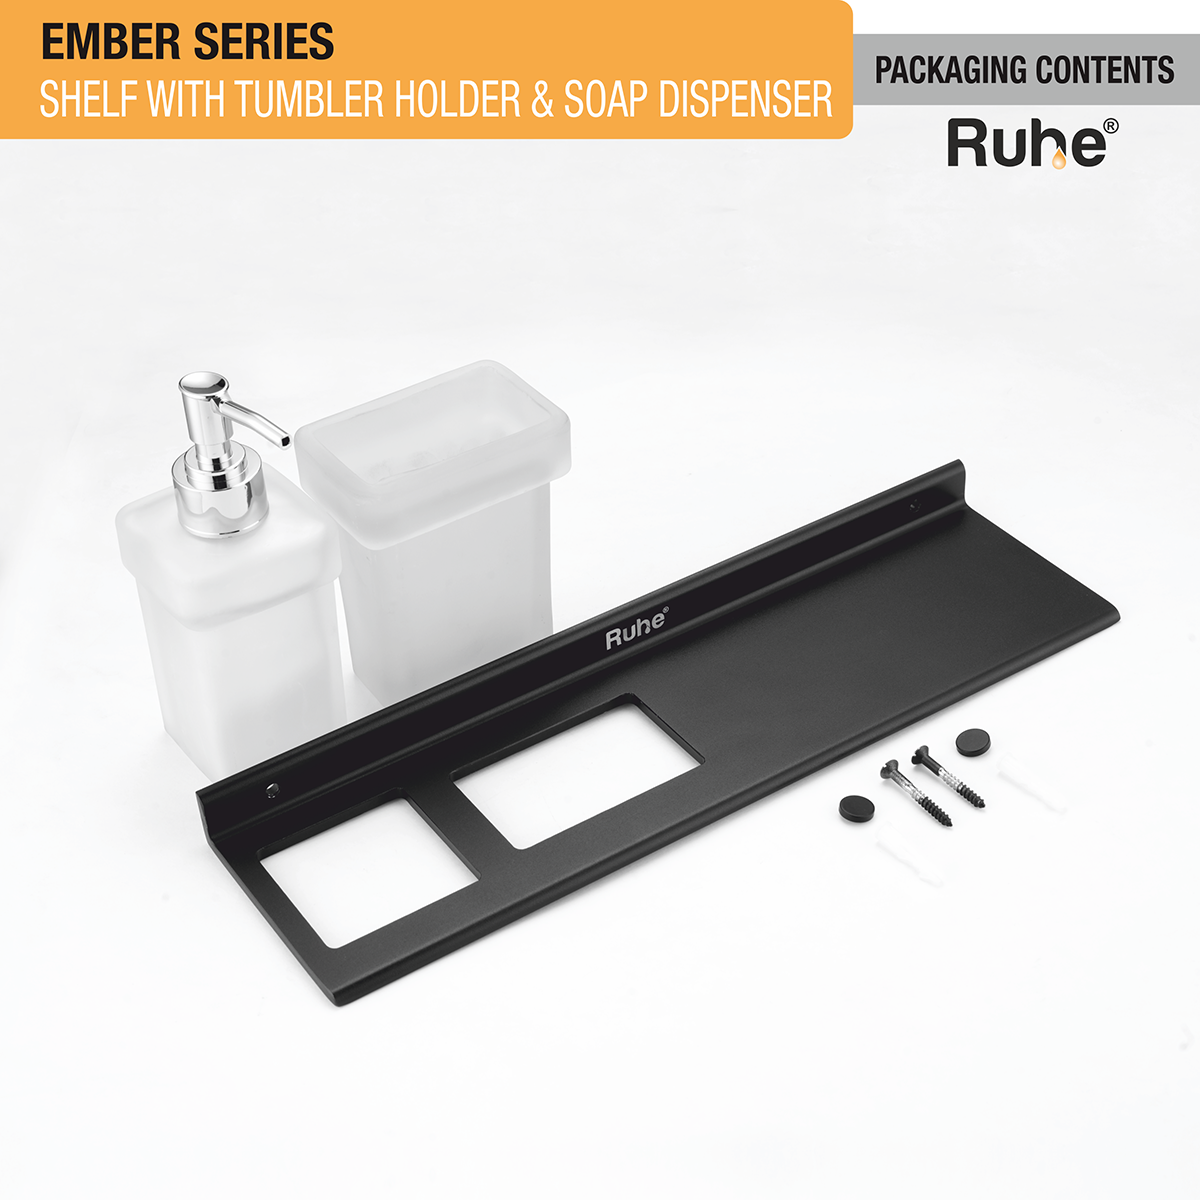 Ember Shelf with Tumbler Holder & Soap Dispenser (Space Aluminium) package content